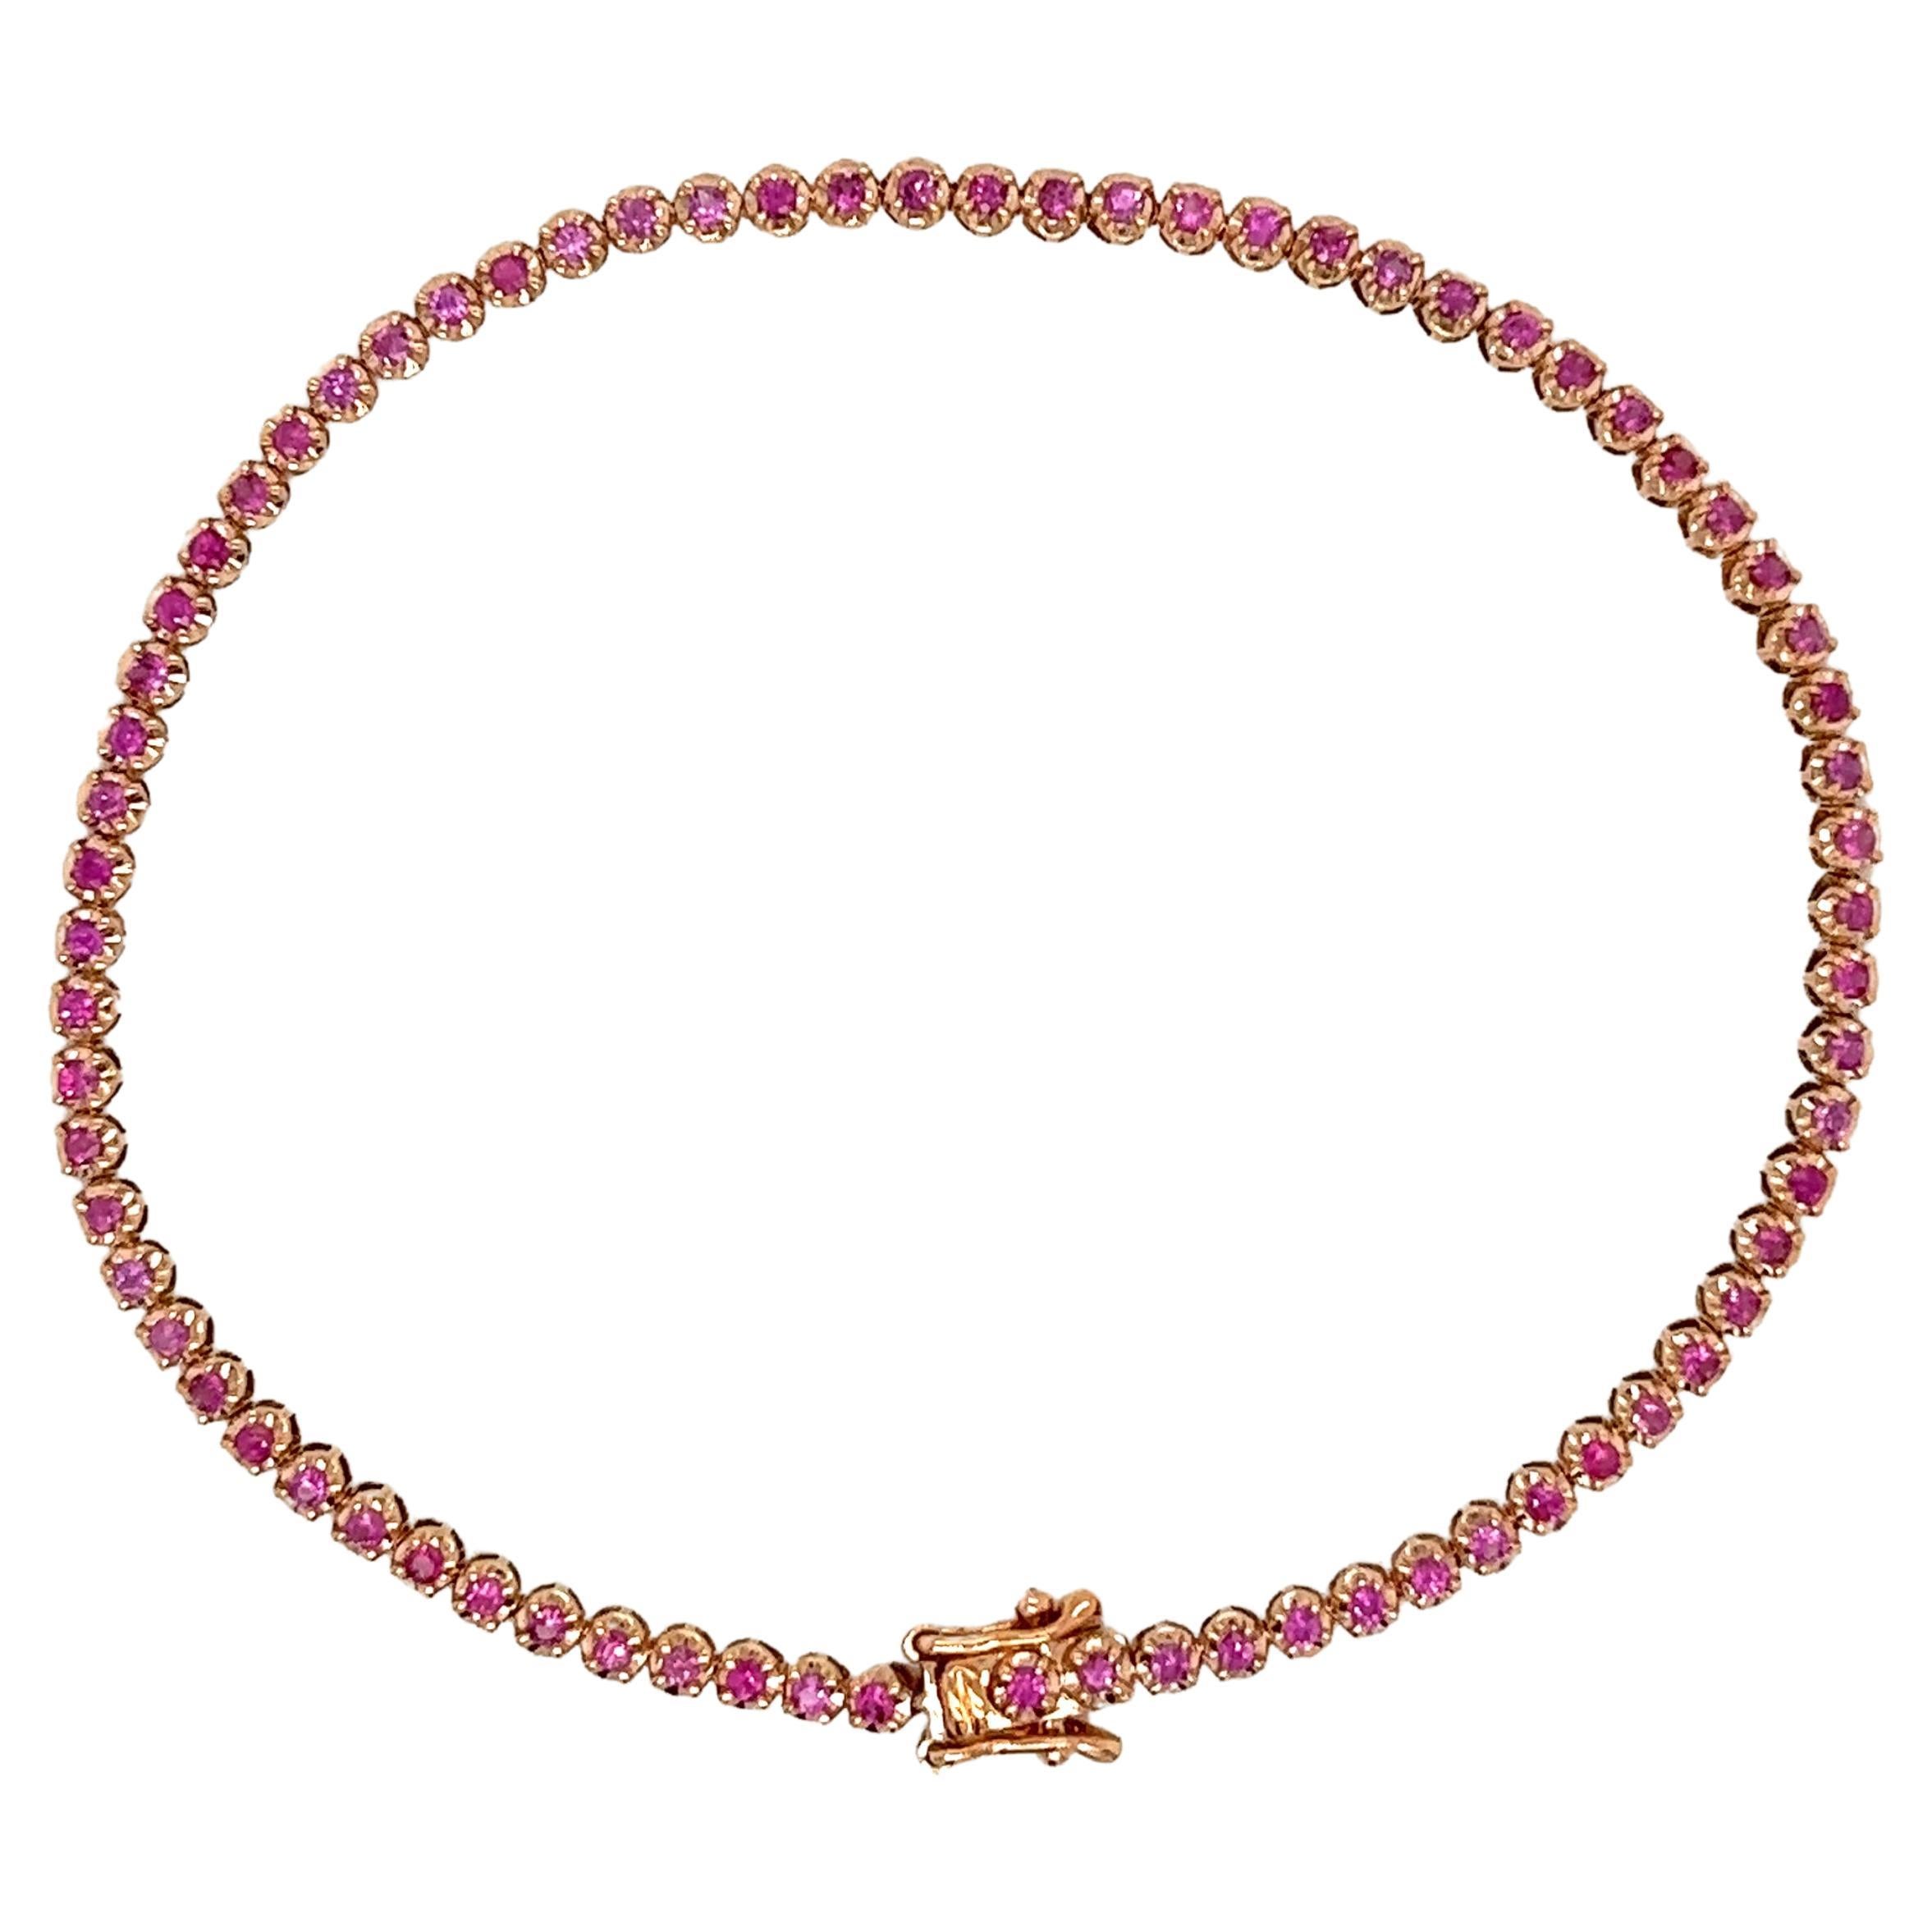 1 Carat Prong Set Round Cut Pink Sapphire Tennis Bracelet in 14Kt Rose Gold For Sale